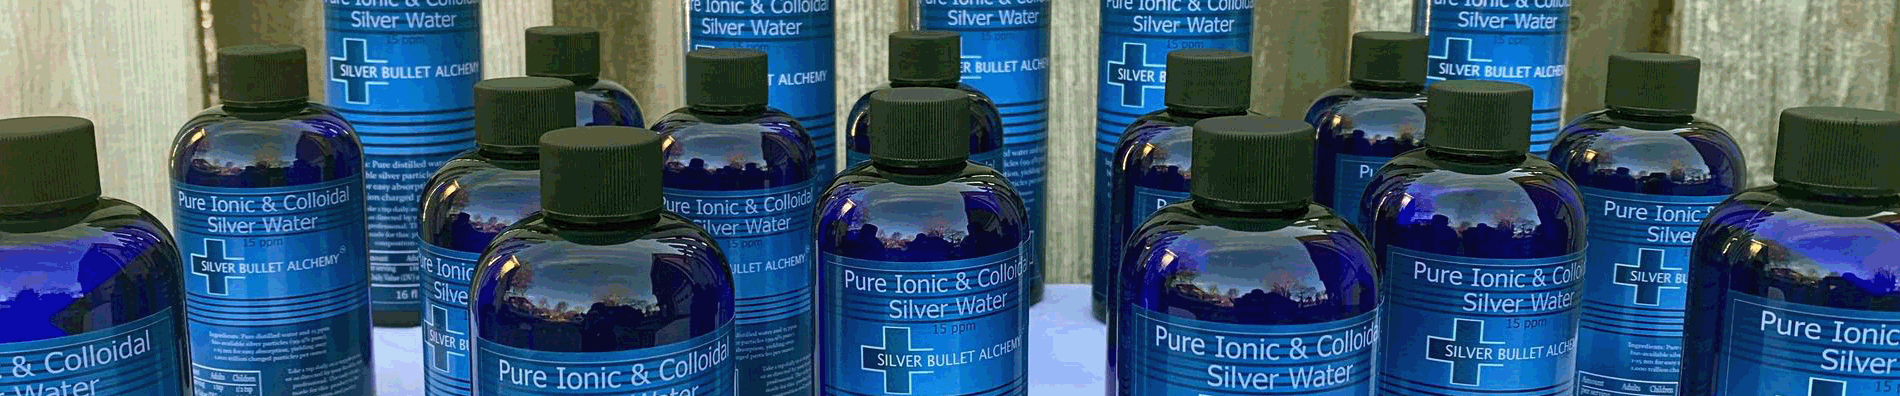 Silver Bullet Alchemy